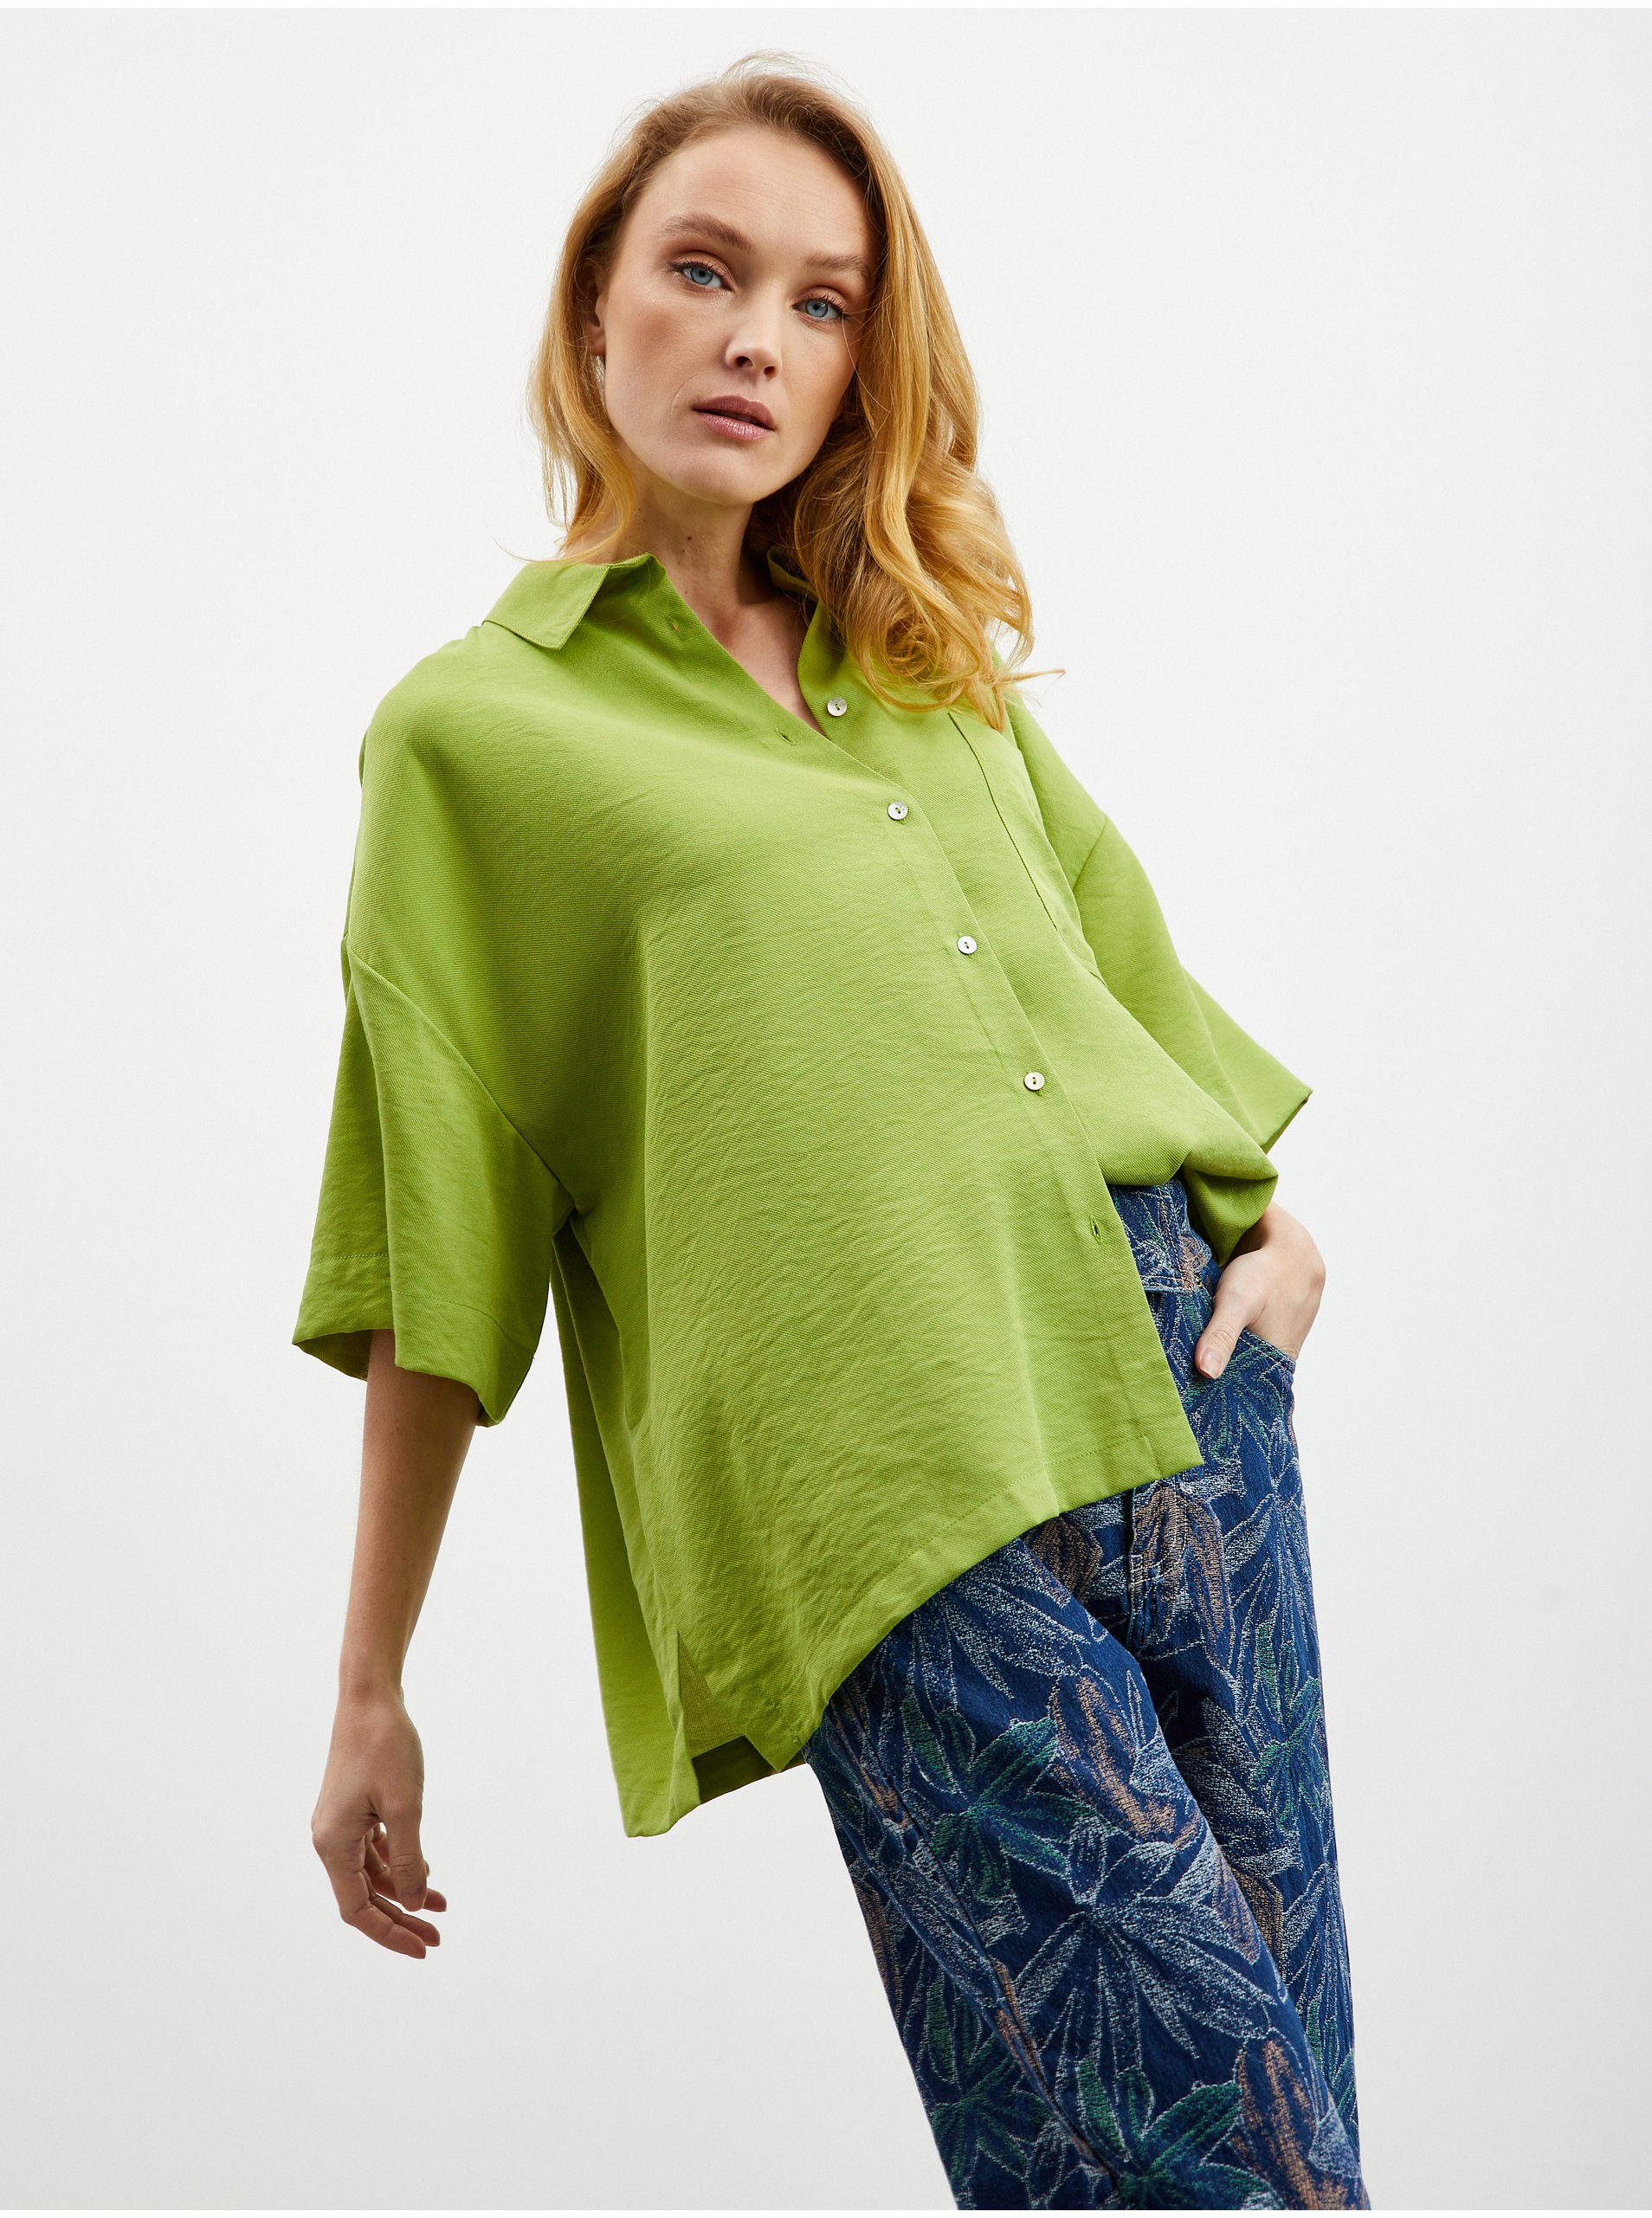 Lacno Svetlo zelená dámska oversize košeľa ZOOT.lab Rhiannon